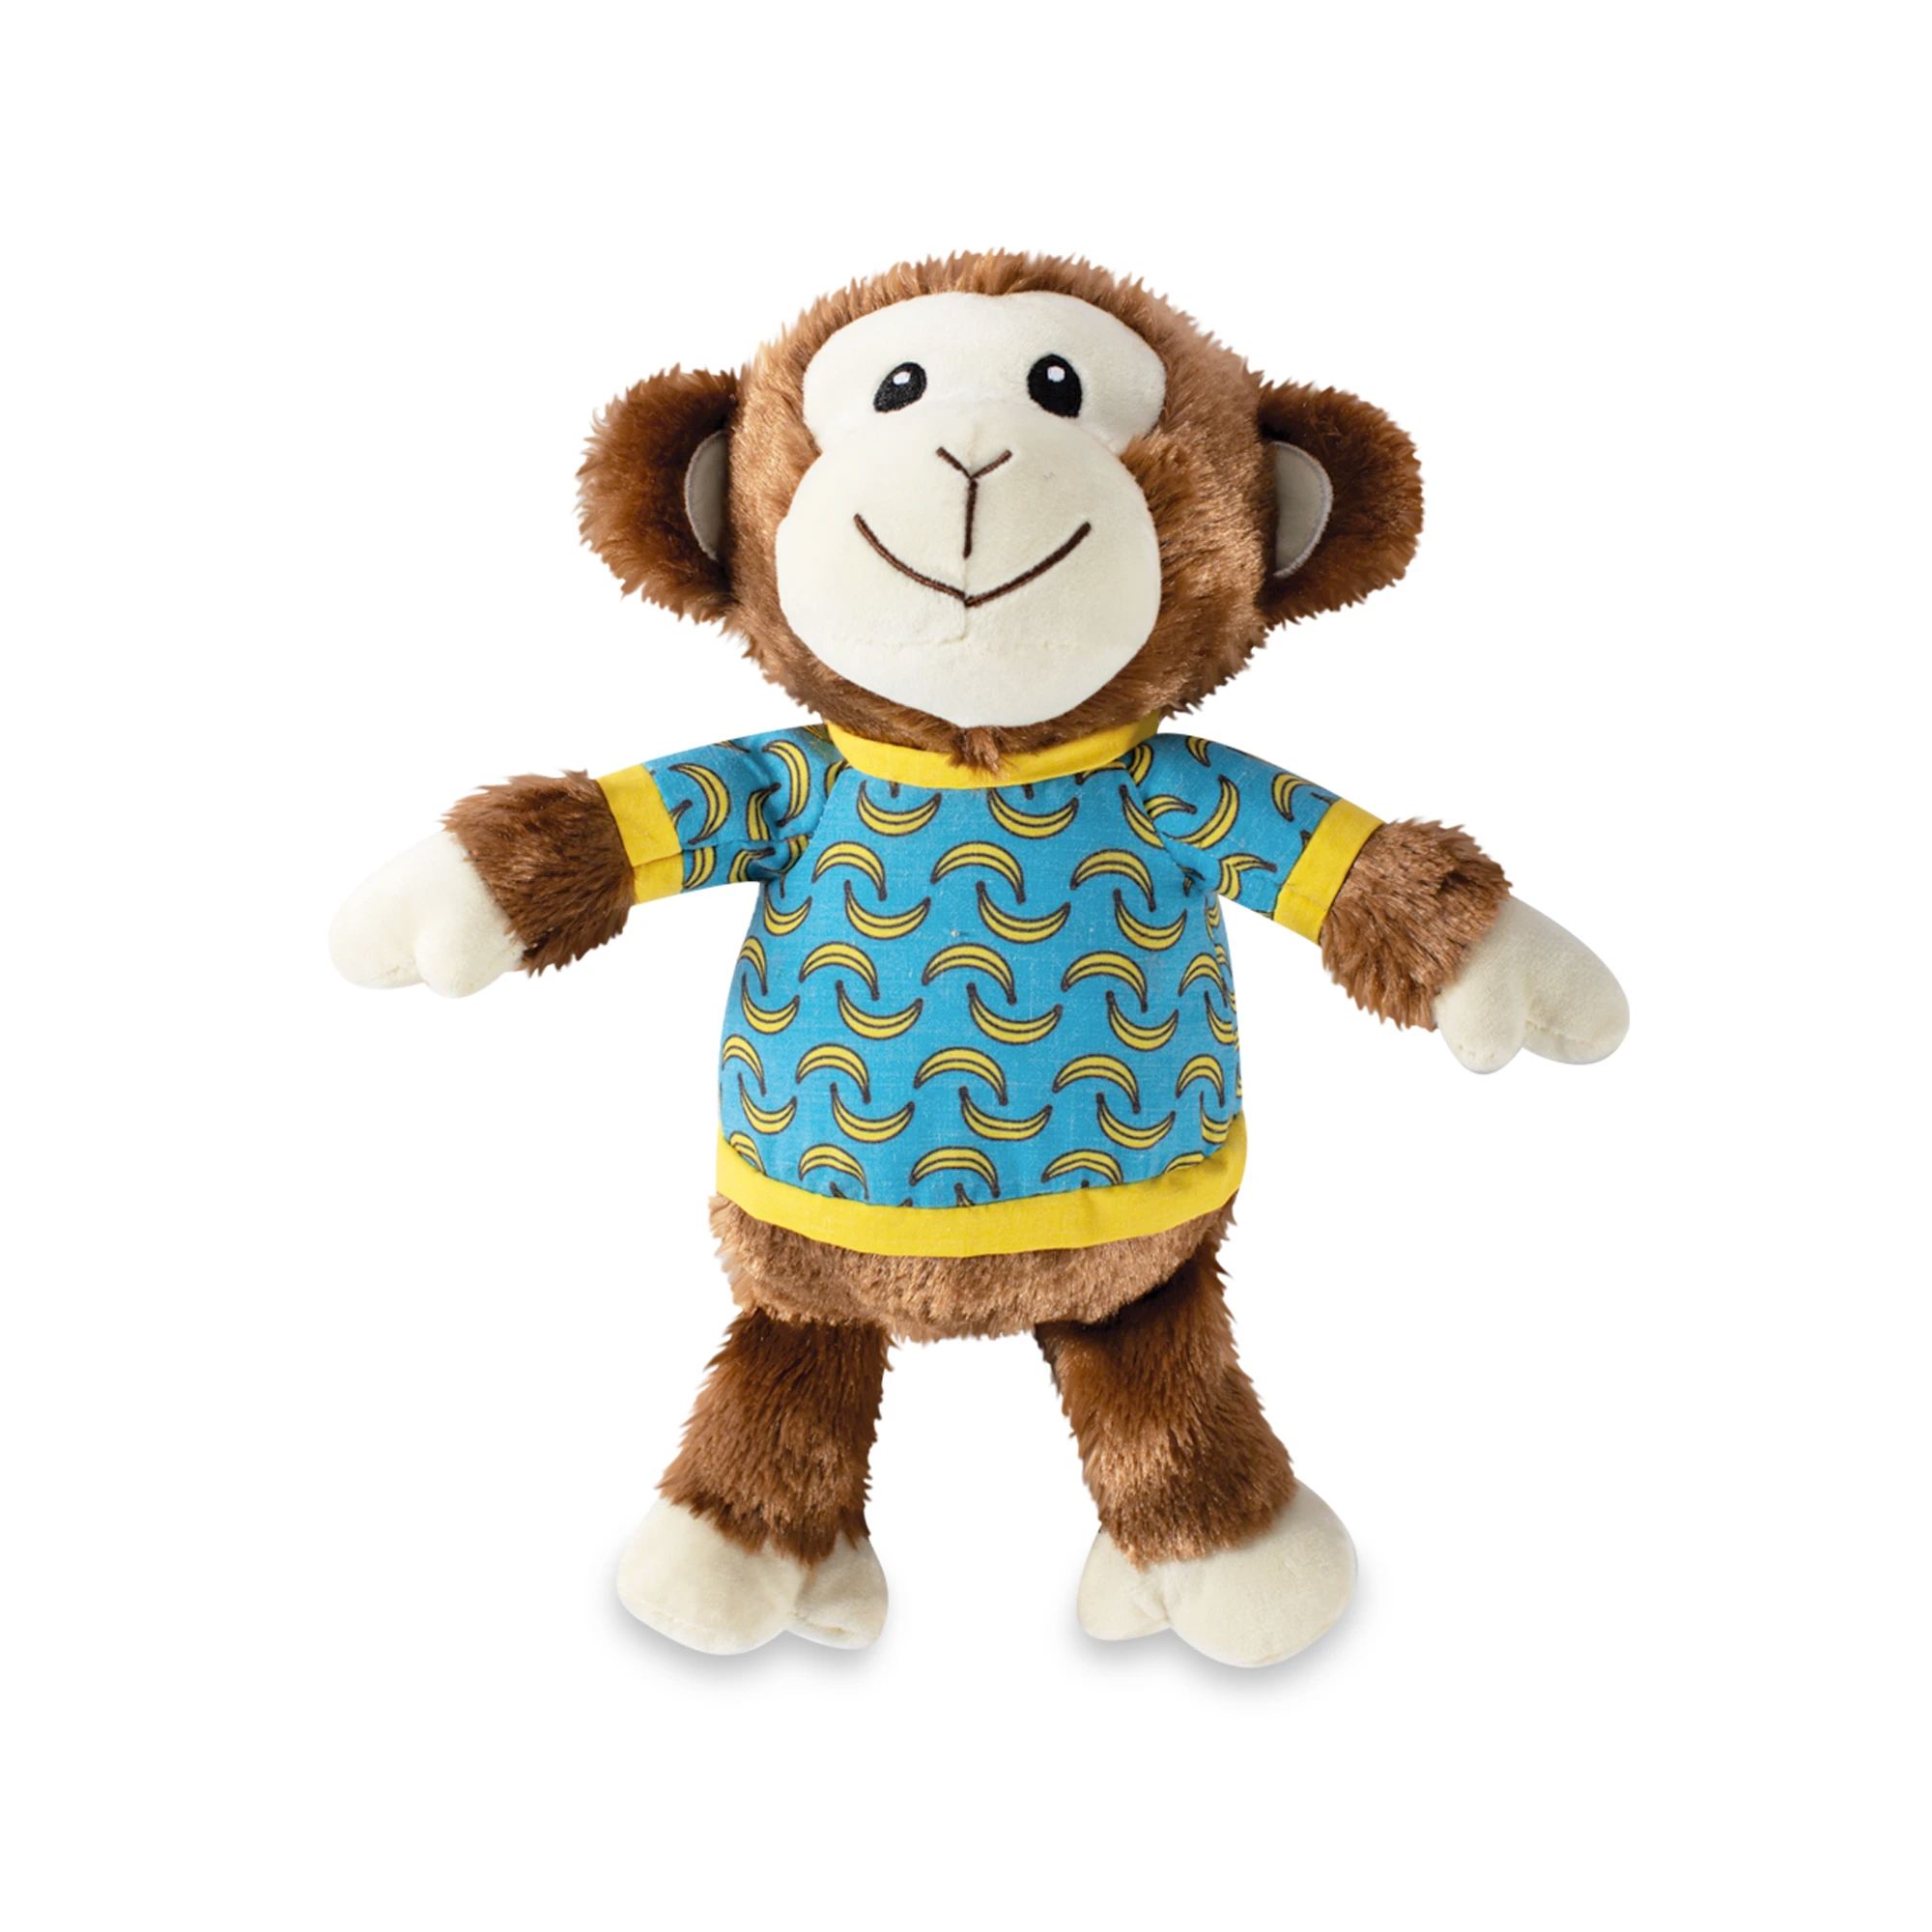 Bananas the Monkey, Squeaky Plush Dog toy